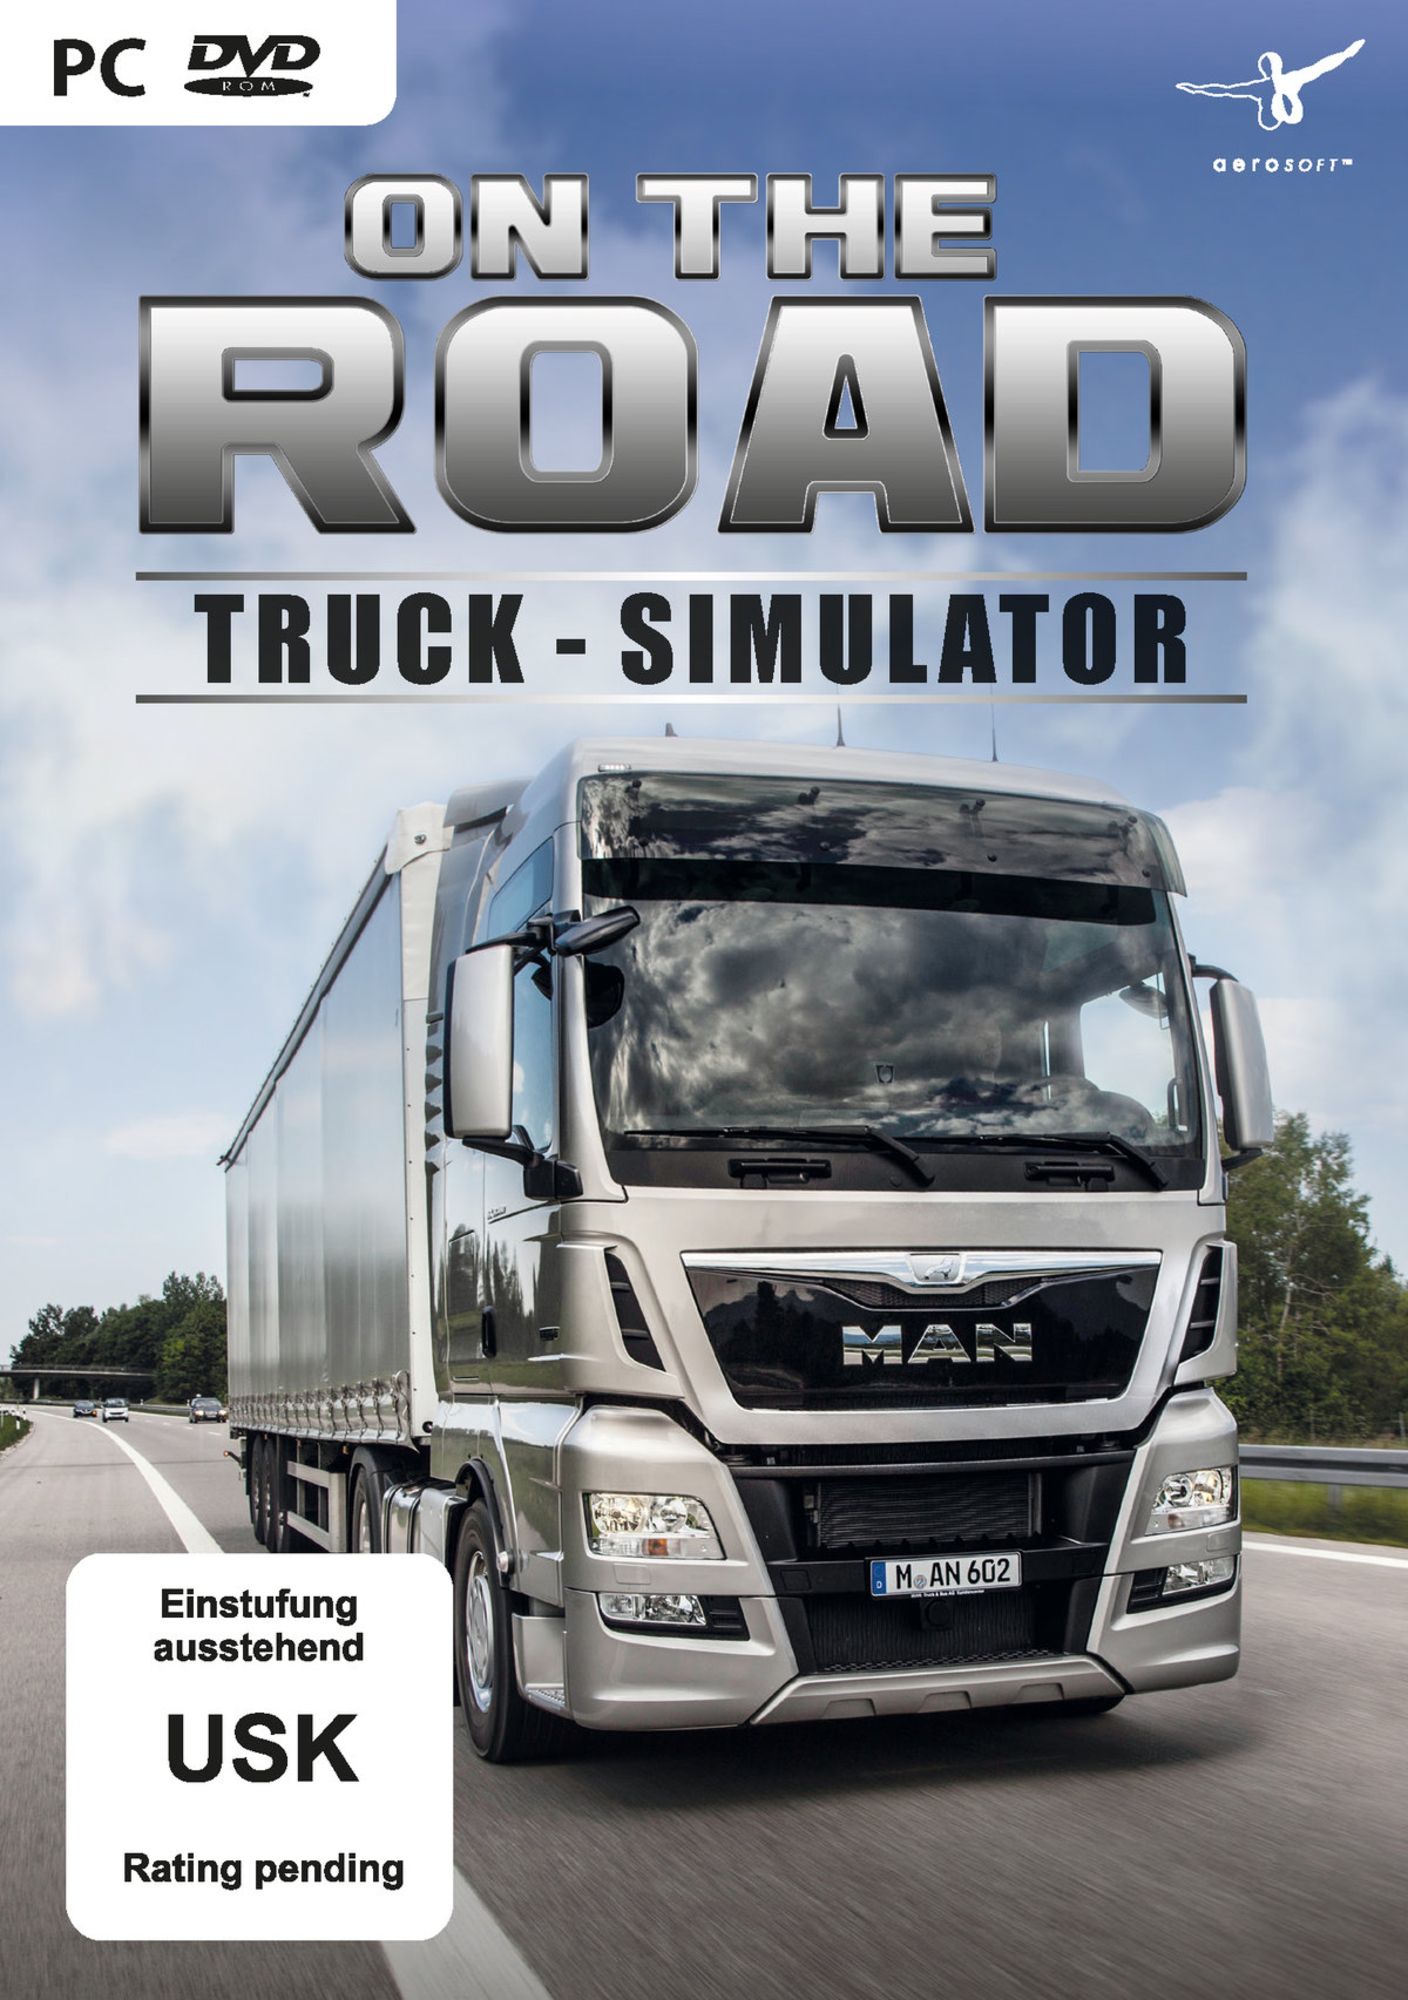 https://images.thalia.media/-/BF2000-2000/169f8b2841a44ad28bf8db126d927302/truck-simulator-on-the-road-truck-lkw-simulator-pc.jpeg